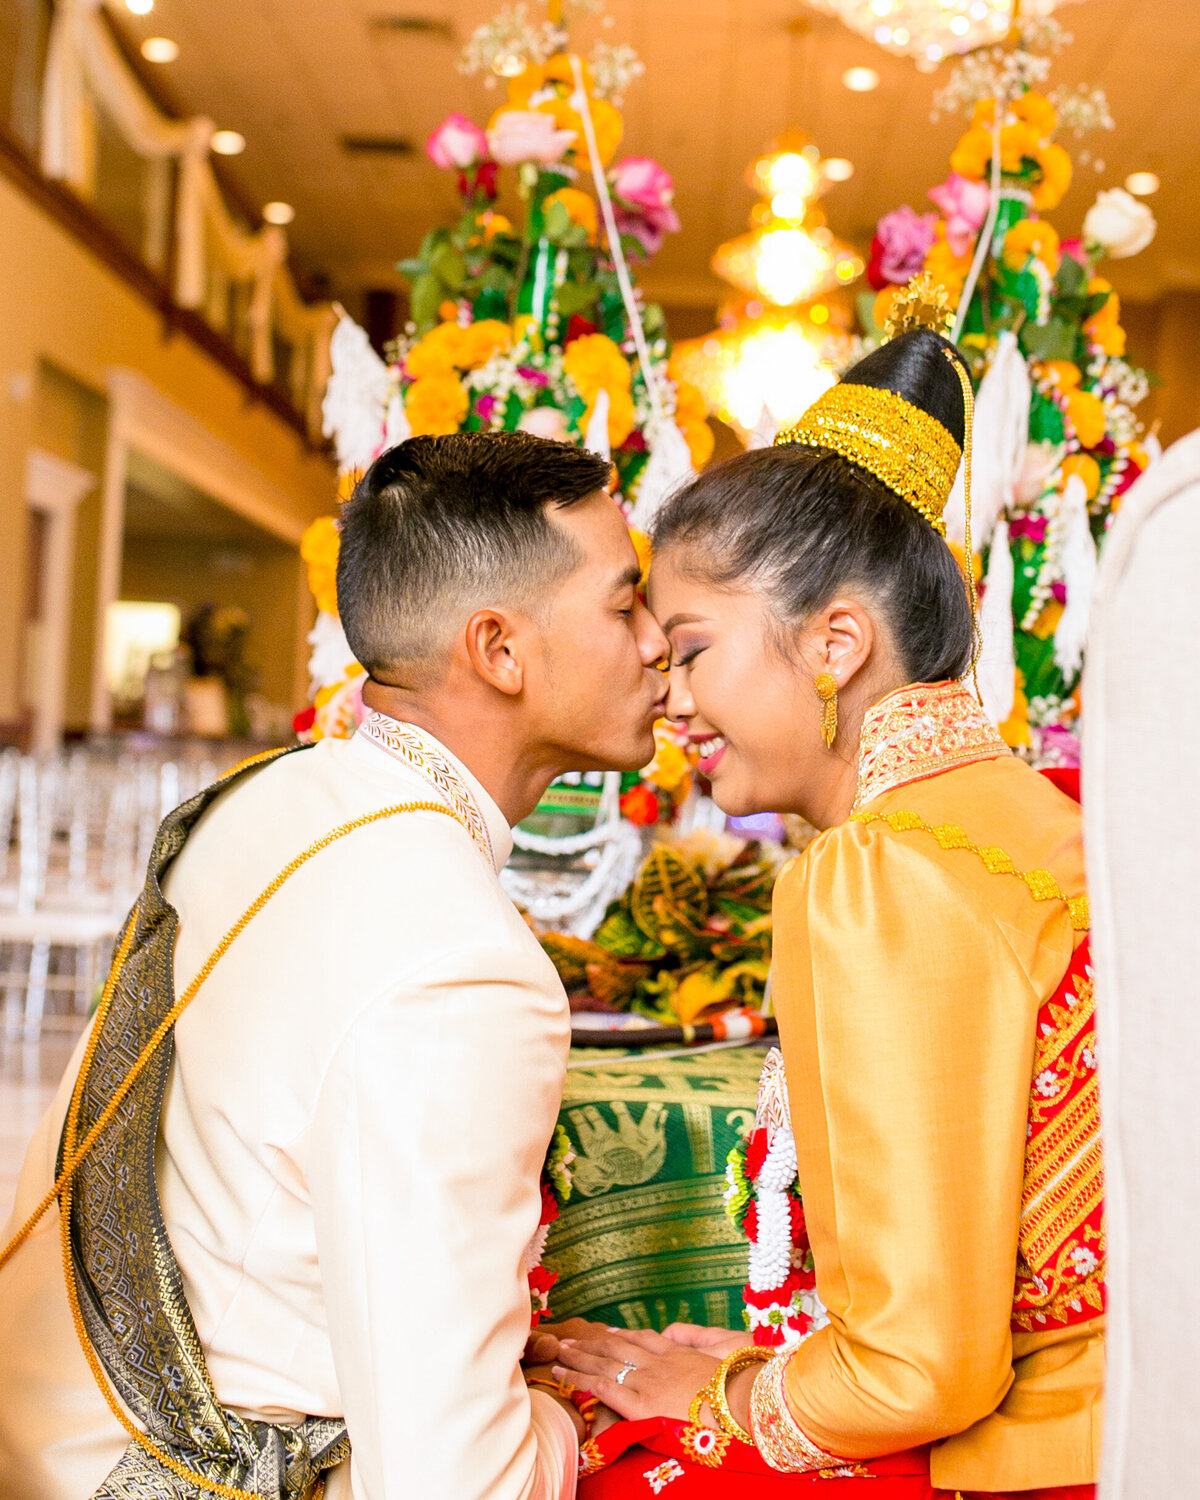 Buddhist groom kisses his bride on the forehead.